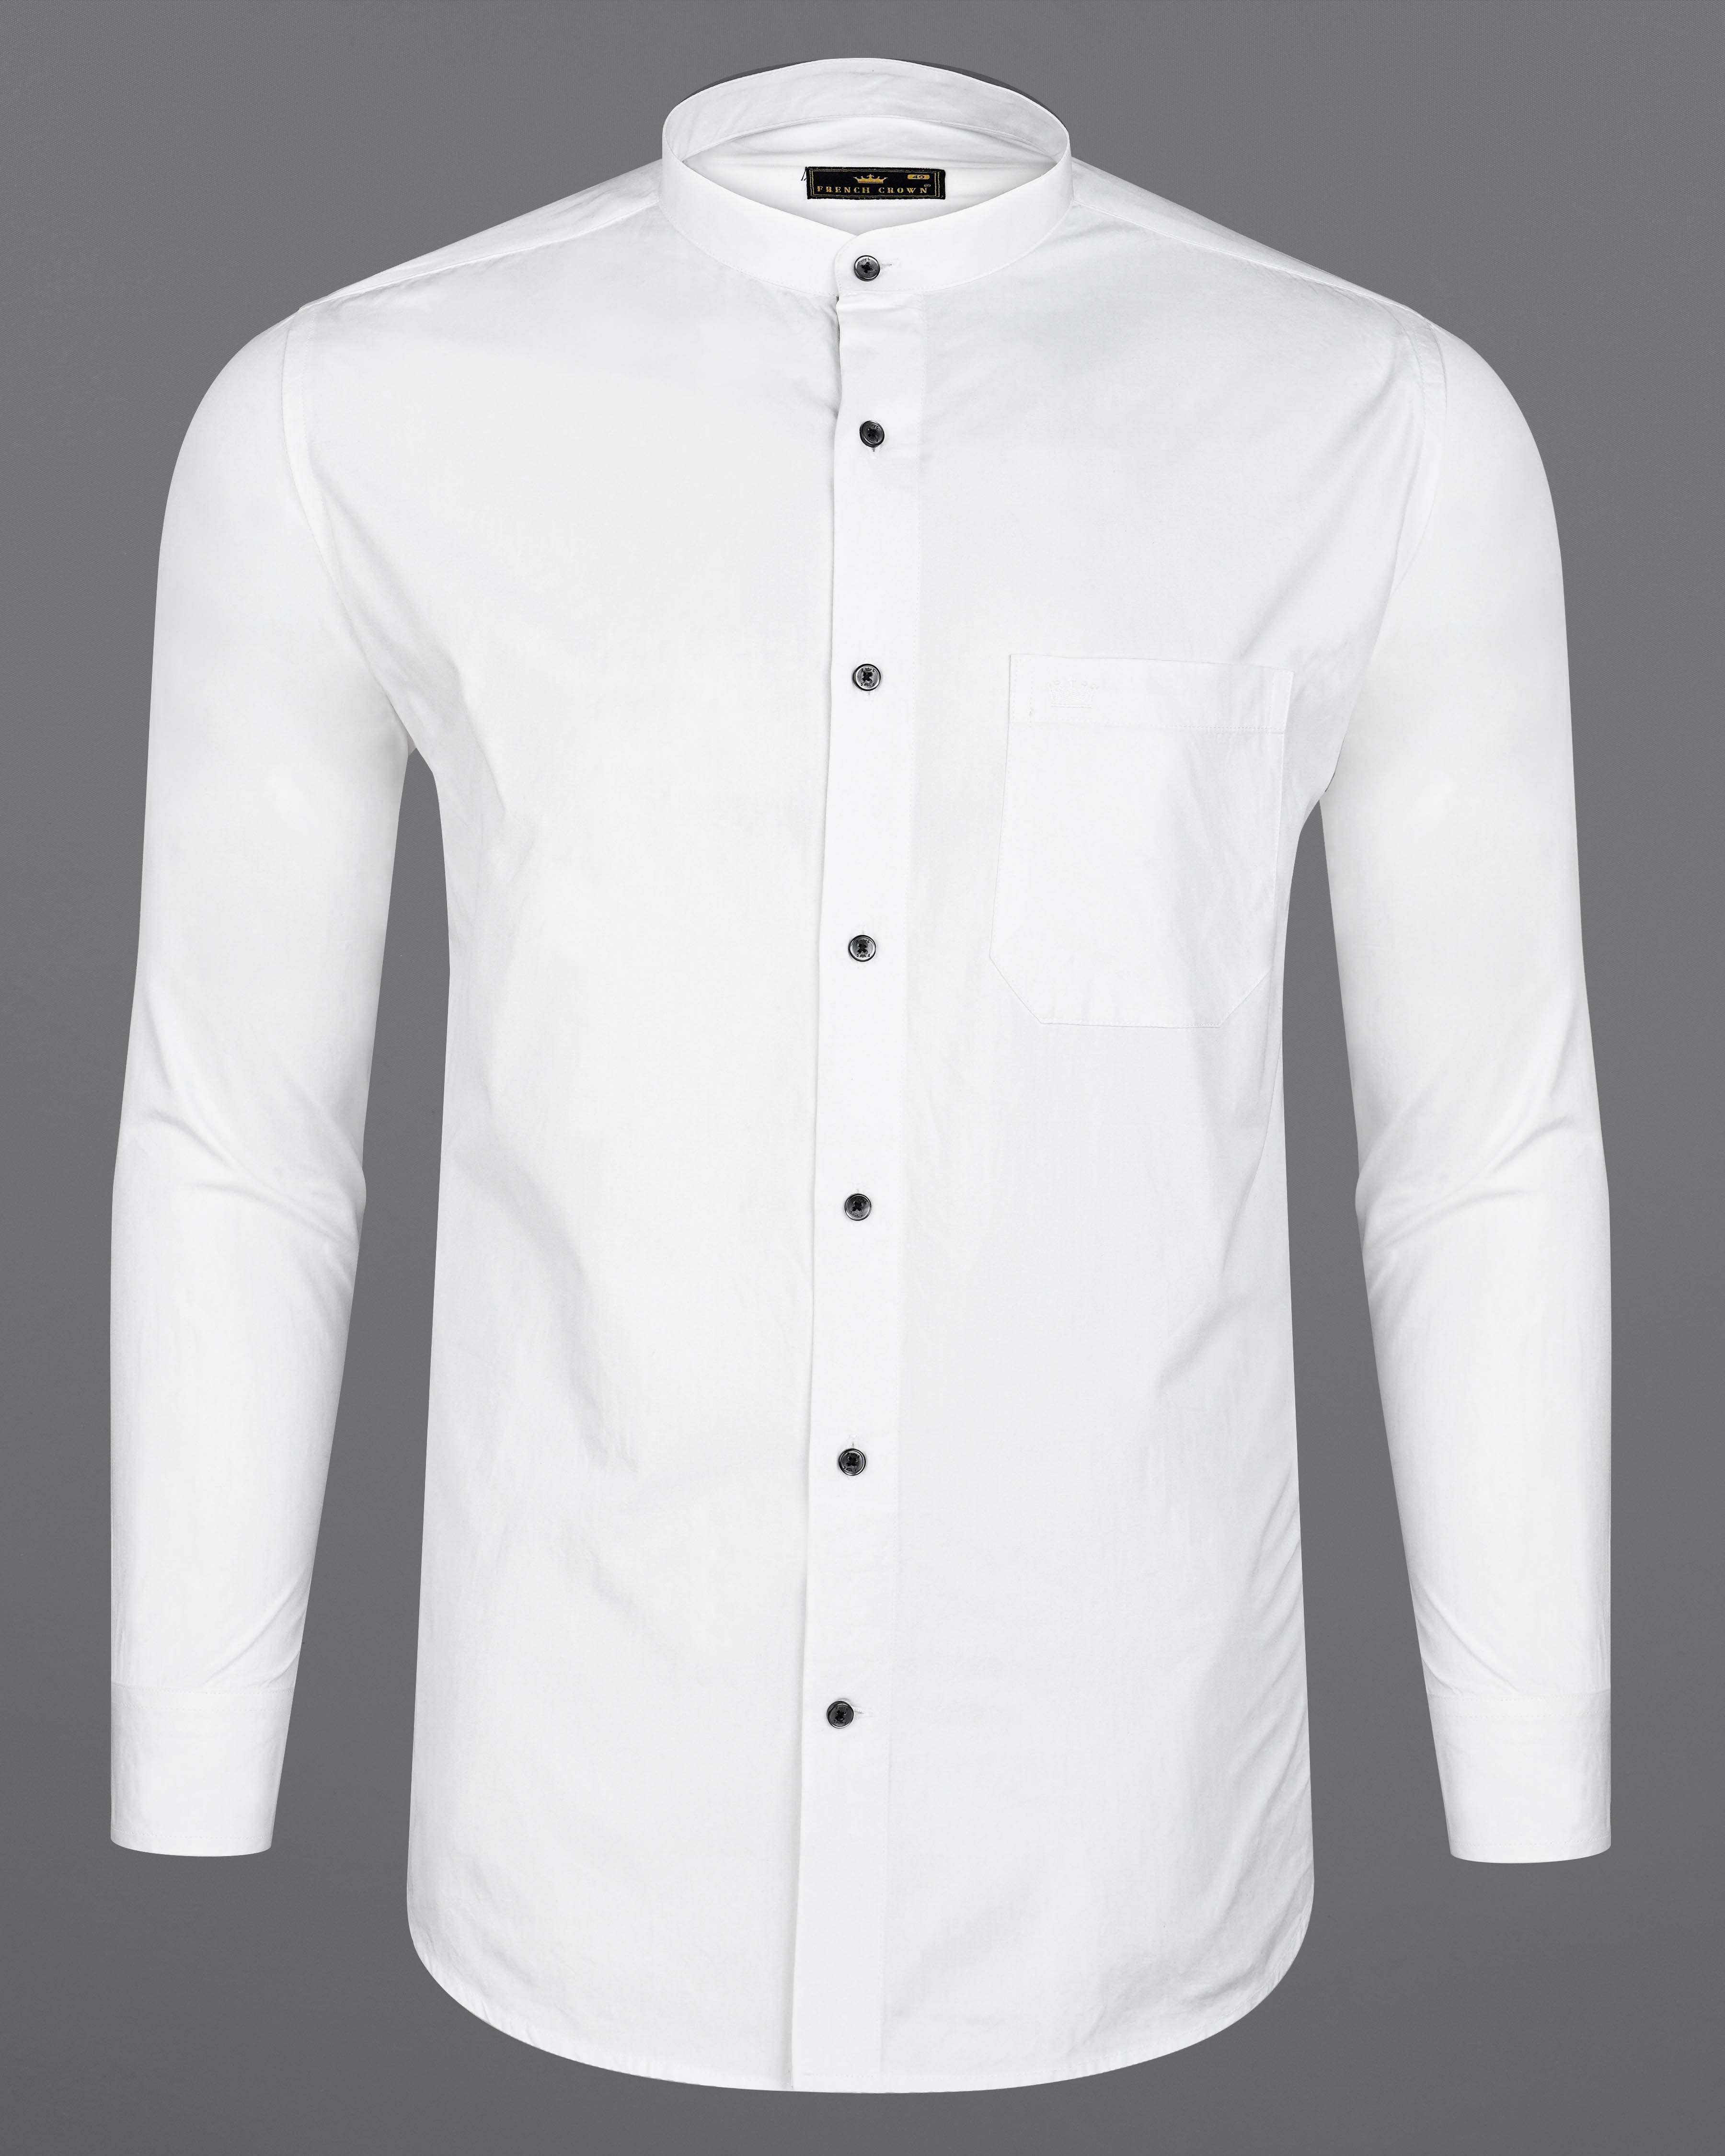 Bright White Premium Cotton Shirt 8048-M-BLK-38,8048-M-BLK-38,8048-M-BLK-39,8048-M-BLK-39,8048-M-BLK-40,8048-M-BLK-40,8048-M-BLK-42,8048-M-BLK-42,8048-M-BLK-44,8048-M-BLK-44,8048-M-BLK-46,8048-M-BLK-46,8048-M-BLK-48,8048-M-BLK-48,8048-M-BLK-50,8048-M-BLK-50,8048-M-BLK-52,8048-M-BLK-52